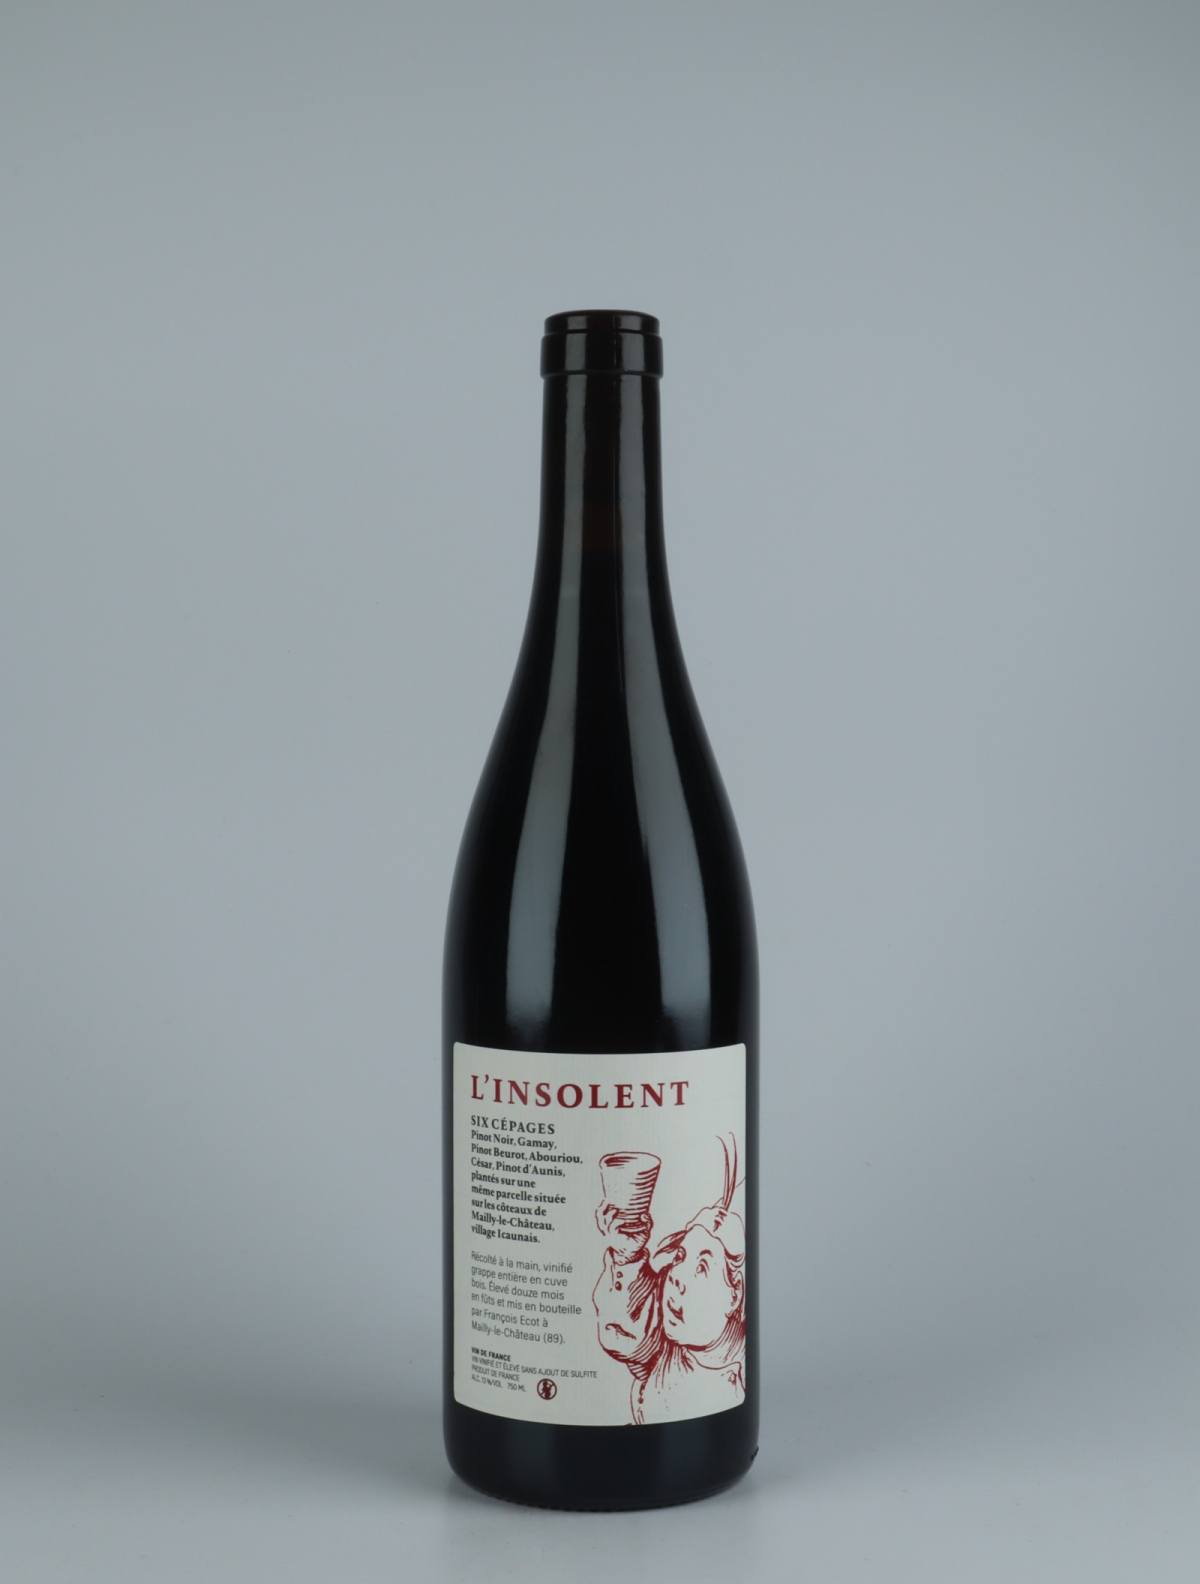 A bottle 2020 L'insolent Red wine from François Ecot, Burgundy in France